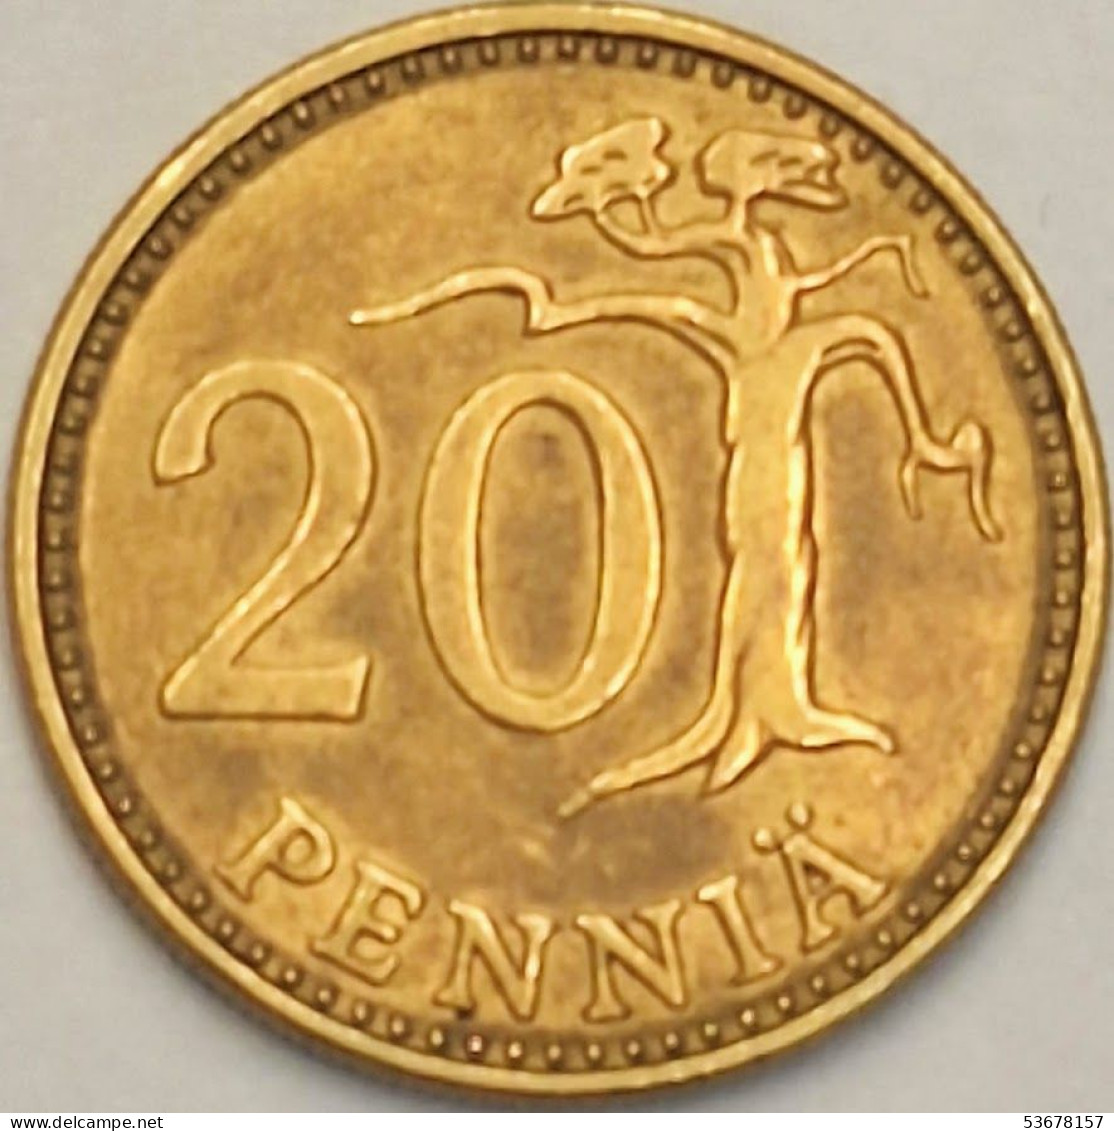 Finland - 20 Pennia 1973 S, KM# 47 (#3930) - Finnland